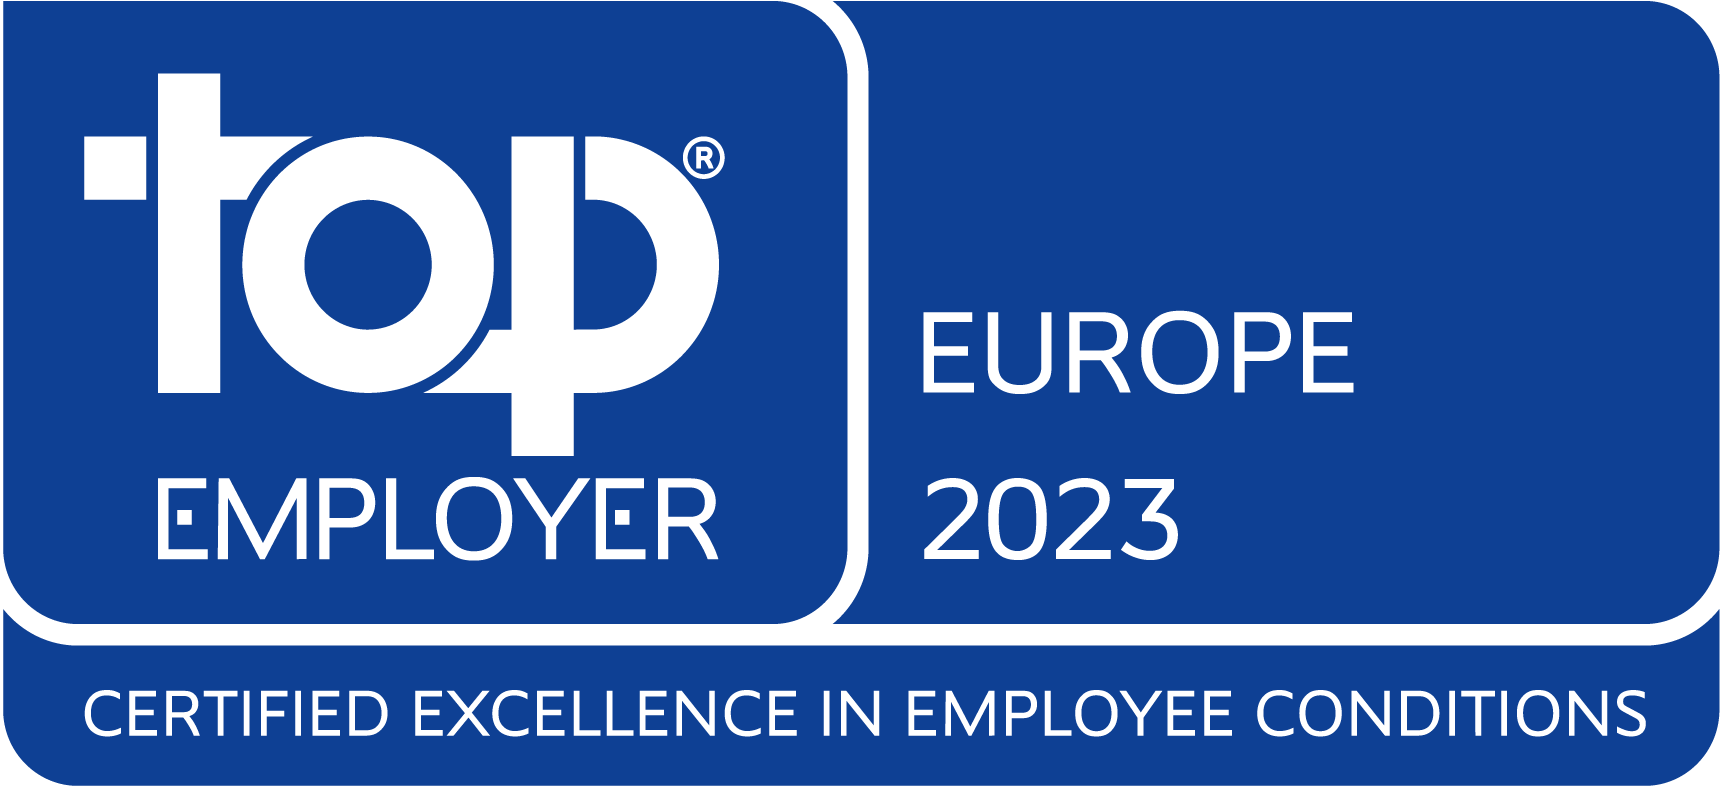 Top Employer 2023 Europe